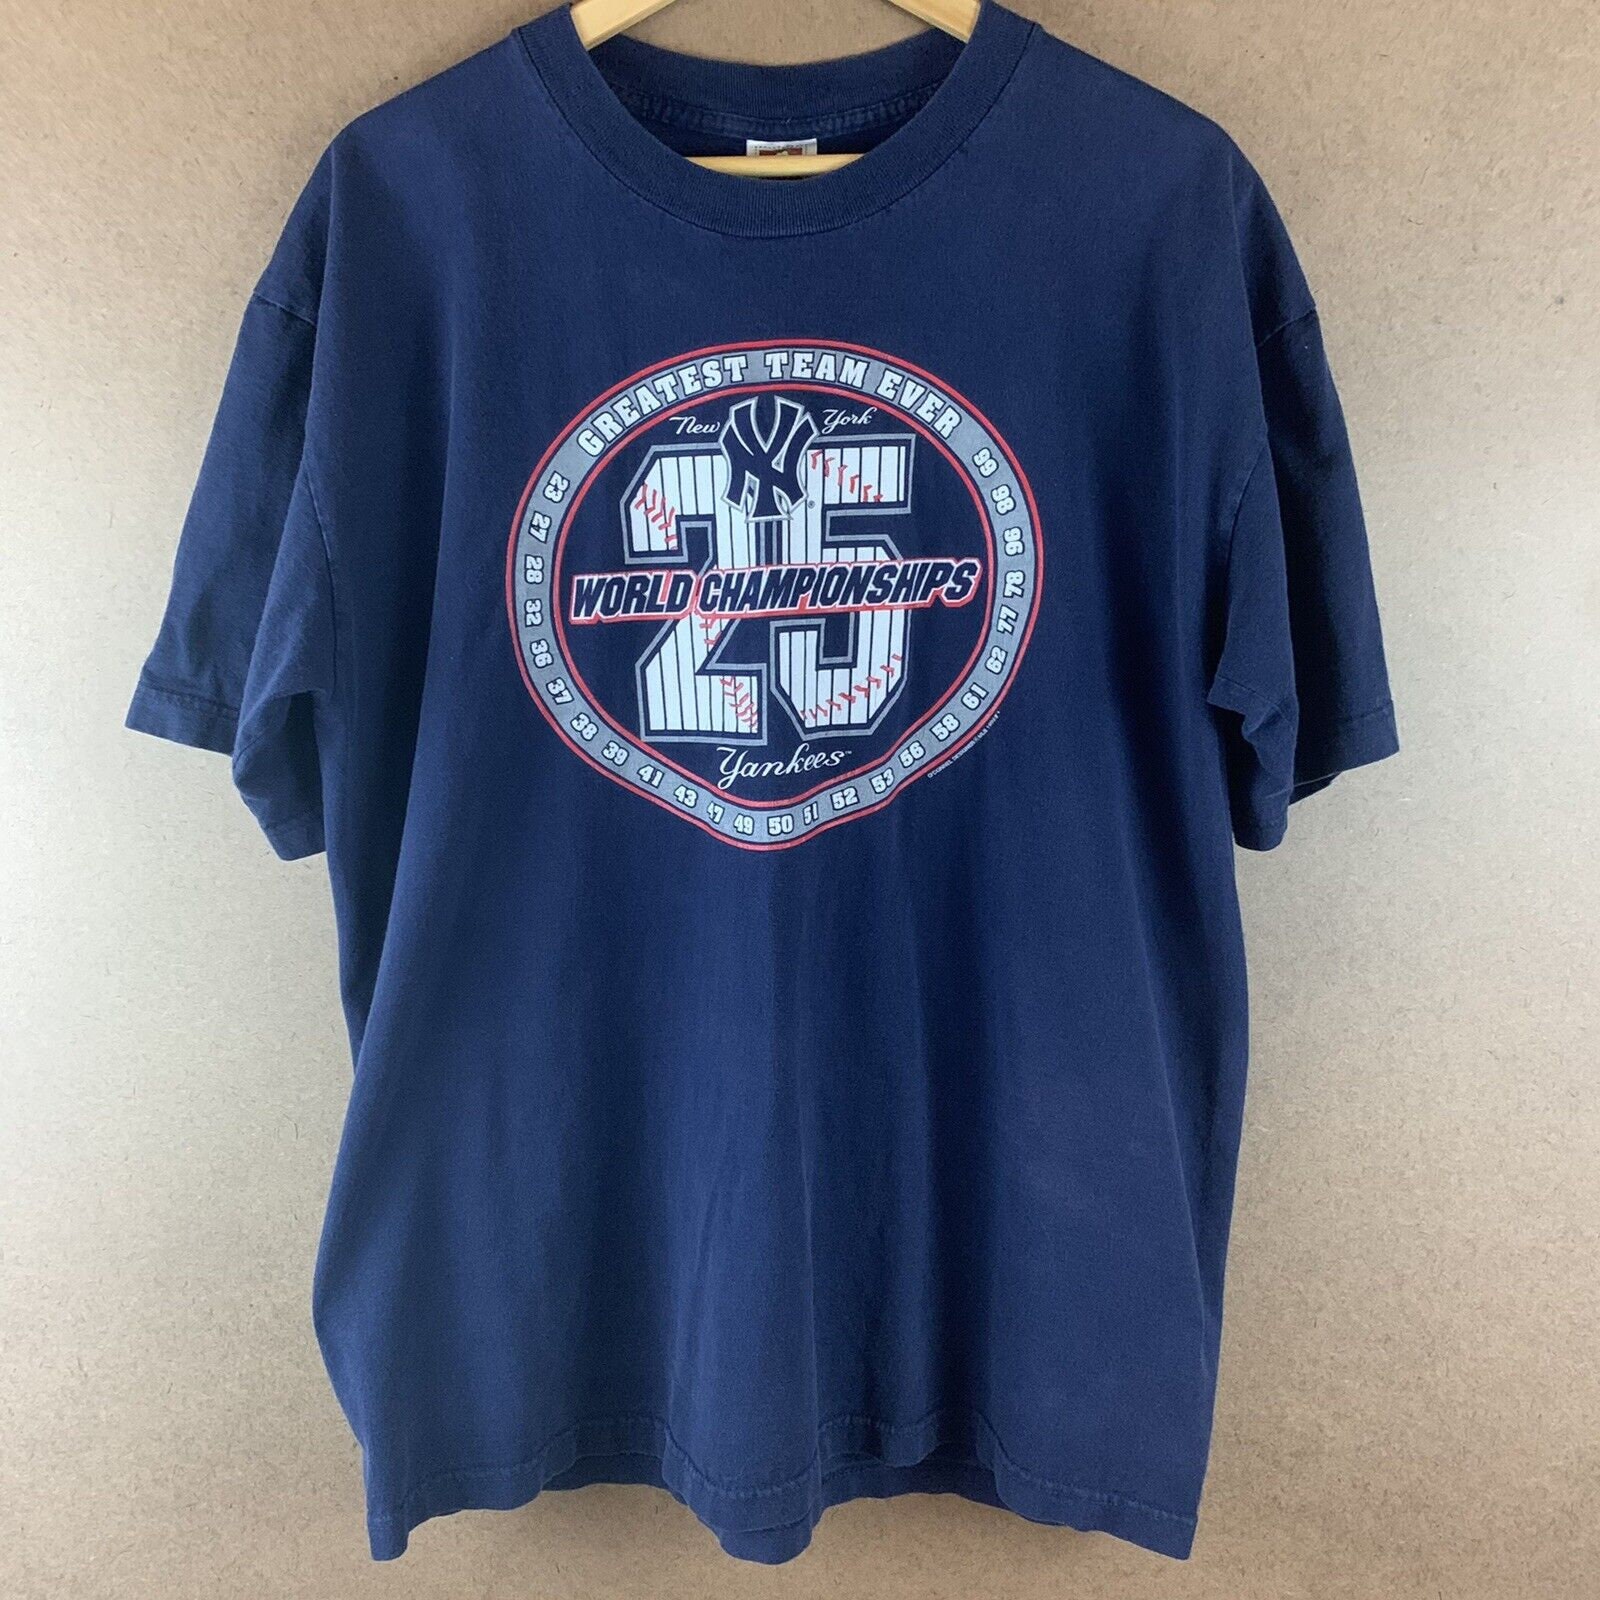 MLB 1999 World Series Vintage Retro Graphic World Series T-Shirt - Chow  Down Movie Store